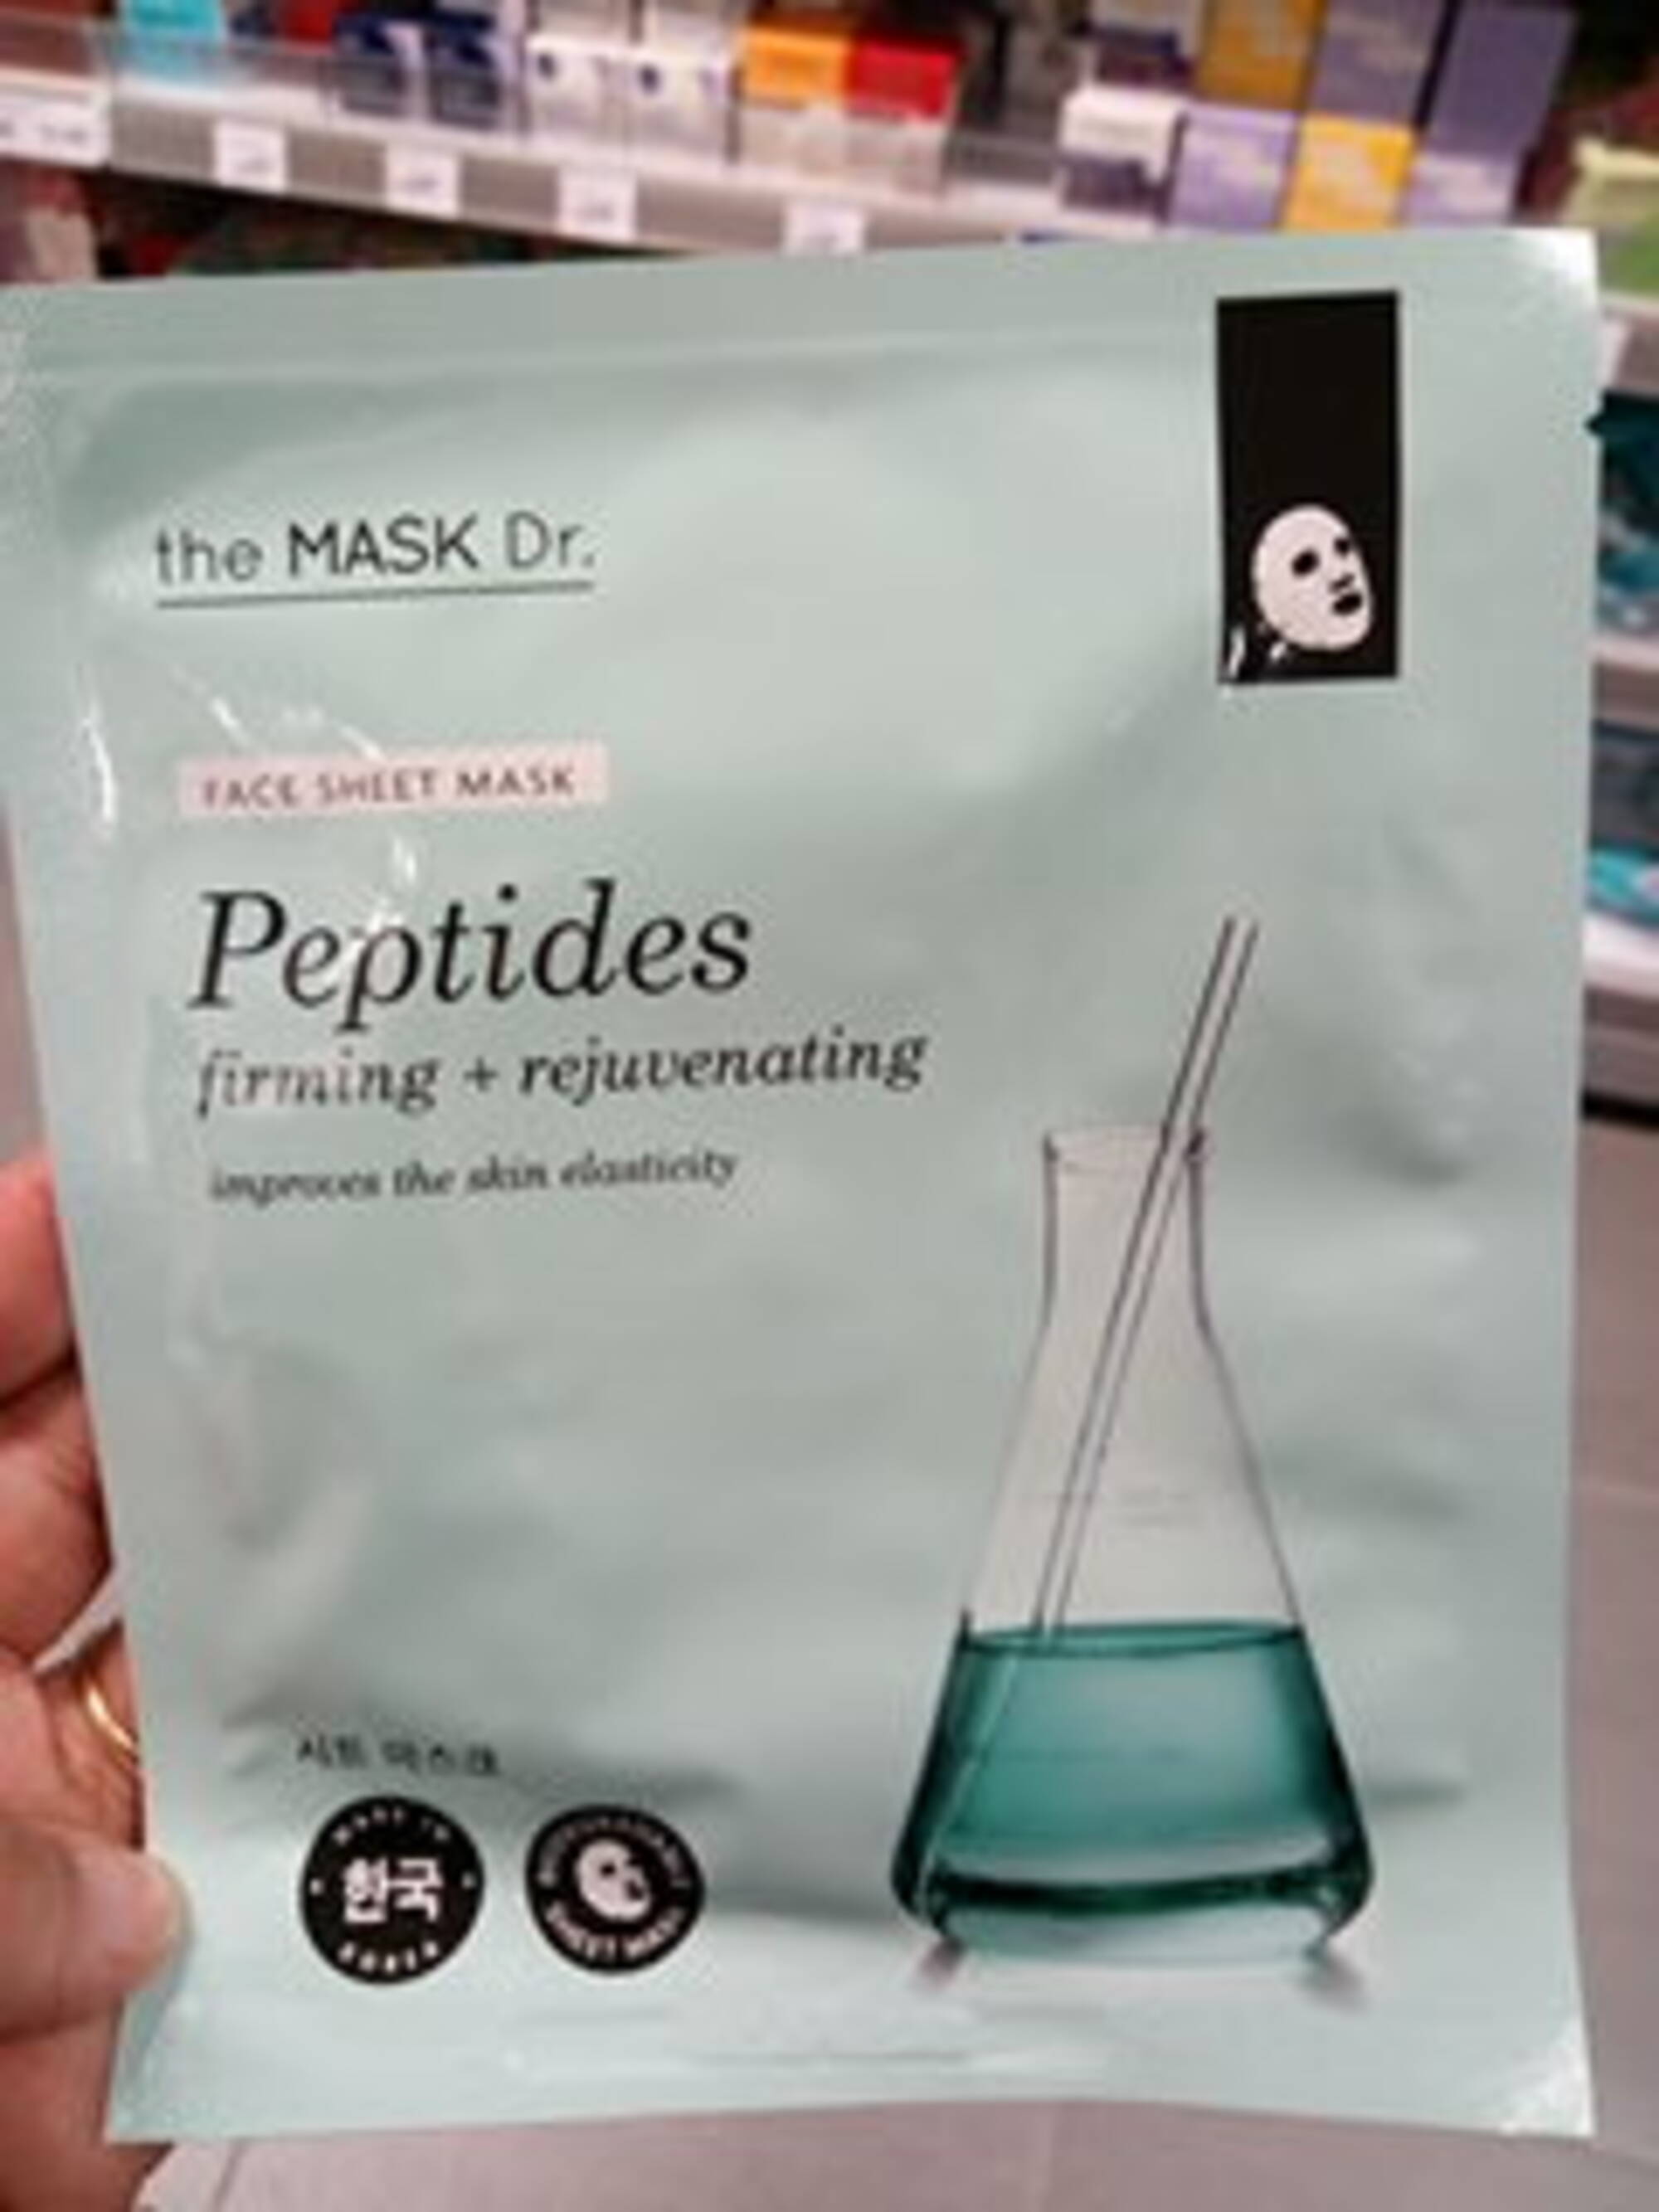 THE MASK DR. - Peptides - Face sheet mask